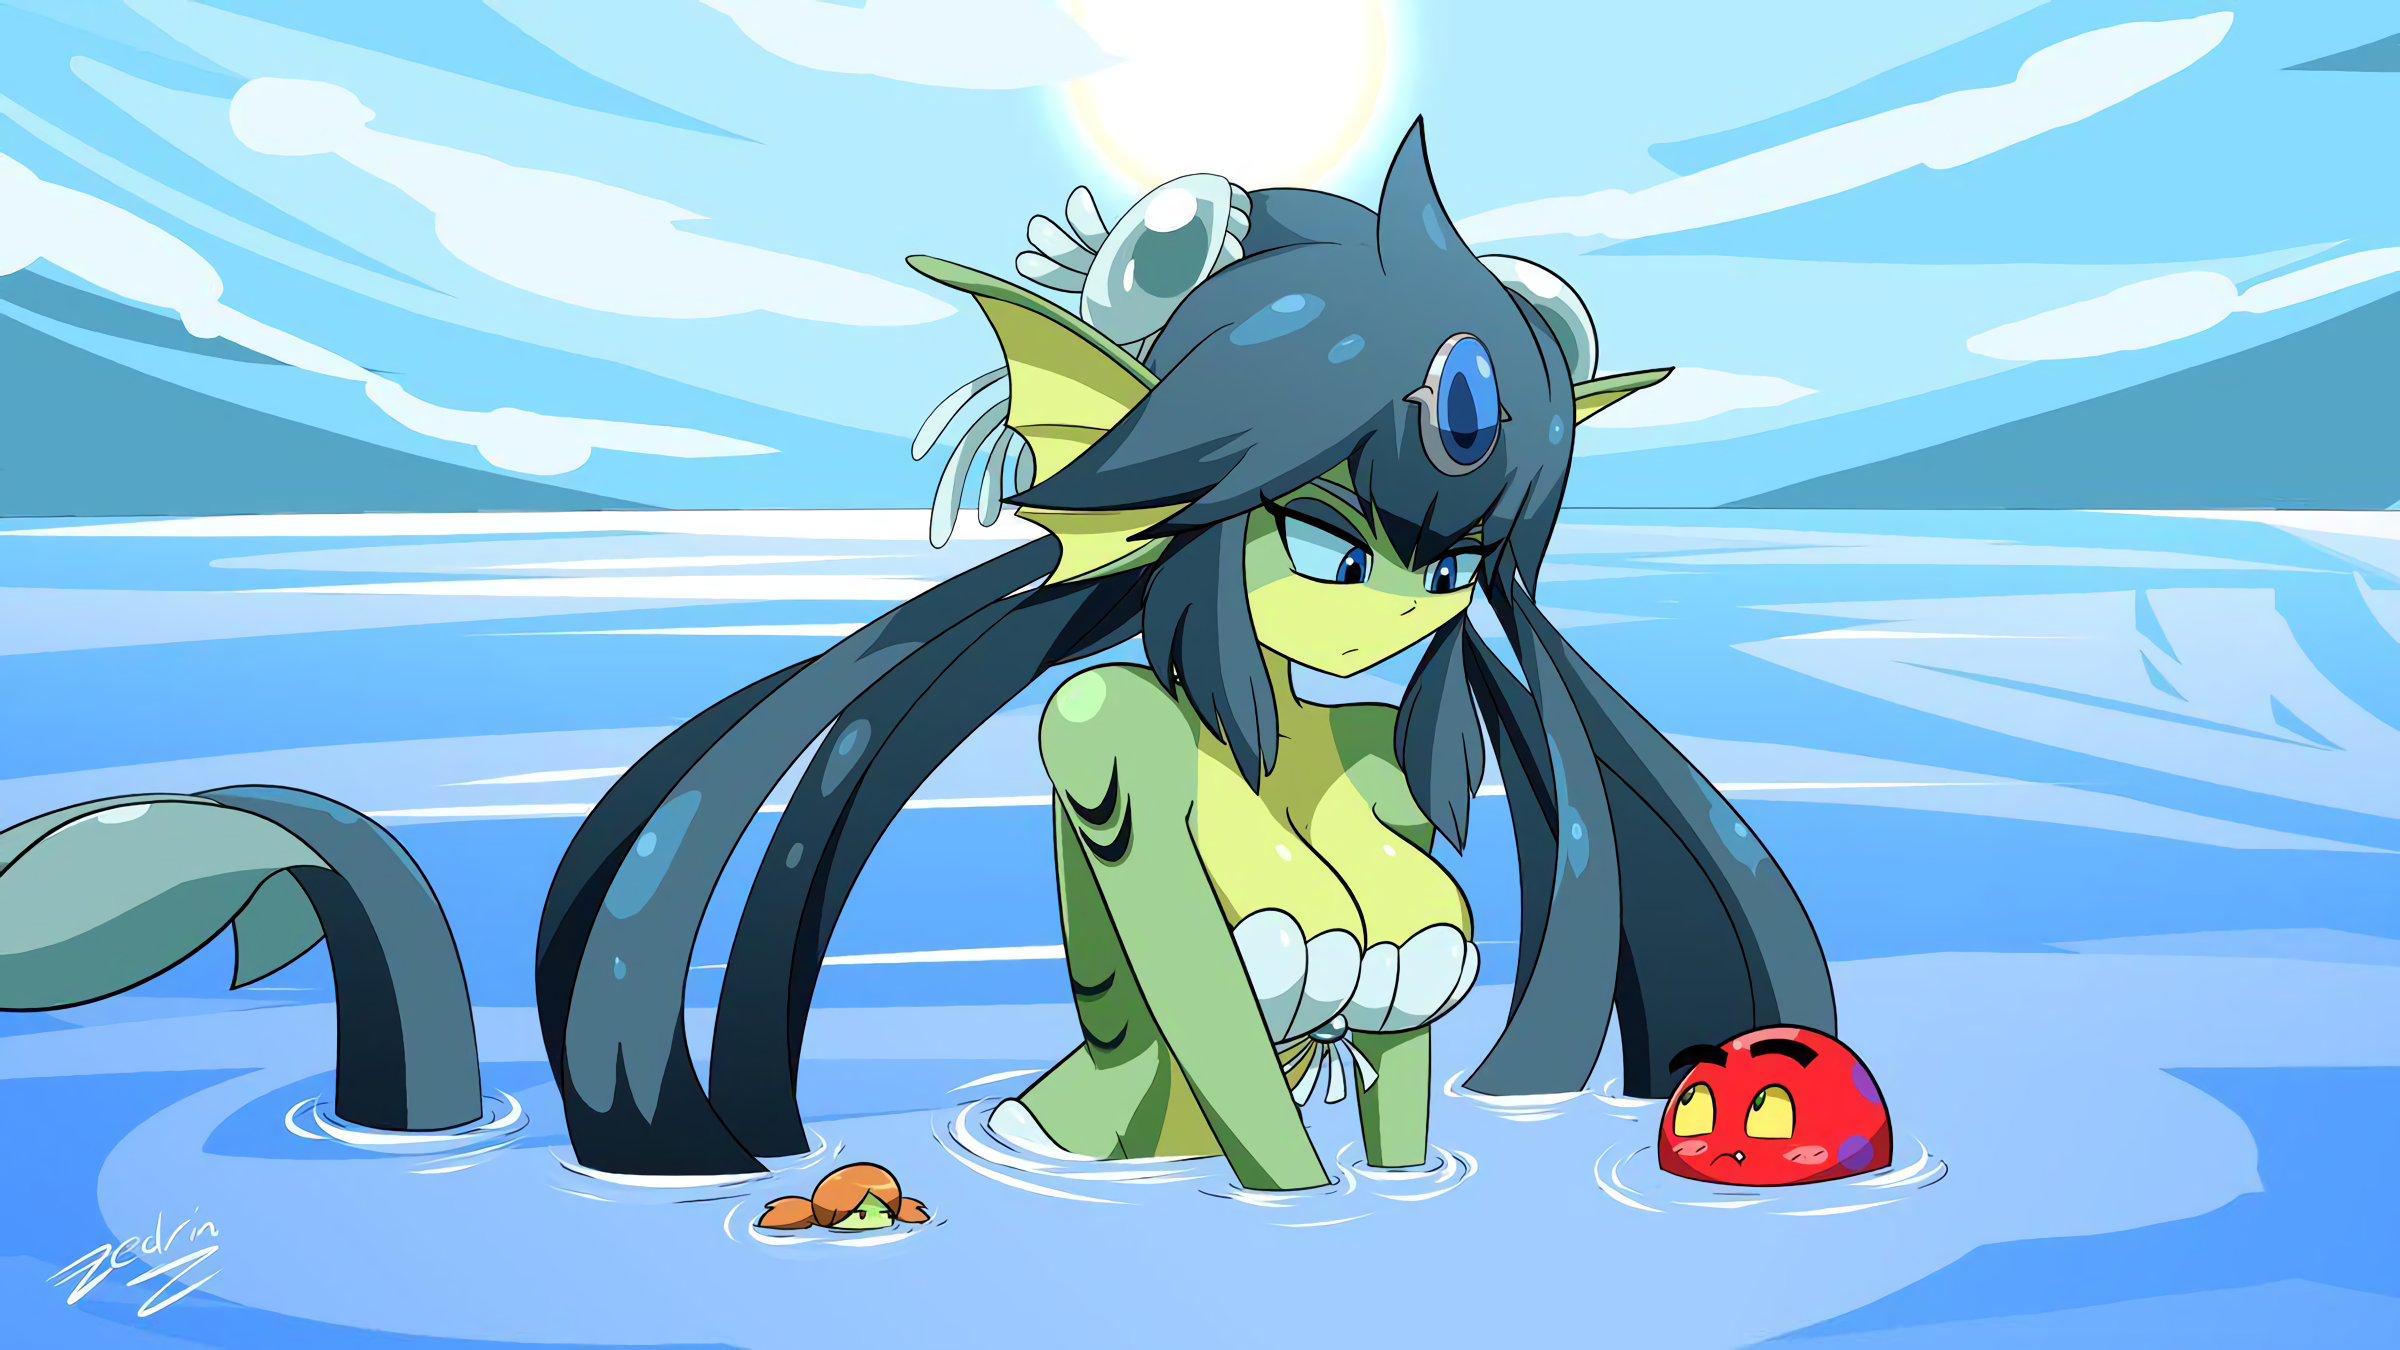 General 2400x1350 Shantae mermaids anime girls monster girl water Shantae: Half-Genie Hero Giga Mermaid cyan green skin in water gems long hair